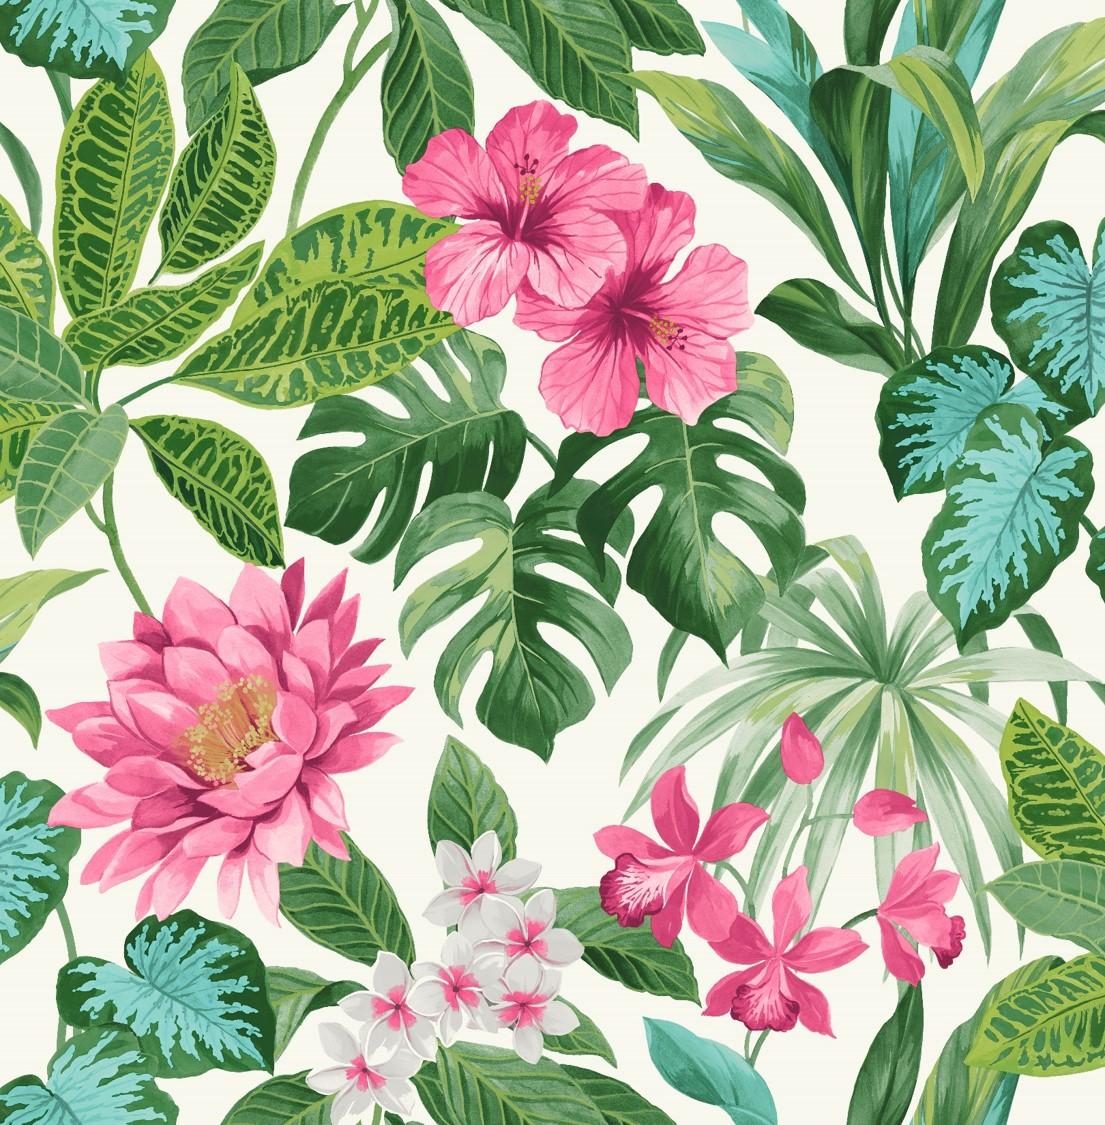 Fine Decor Tropica Rainforest Green Pink Palm Leaf Floral Wallpaper FD42474